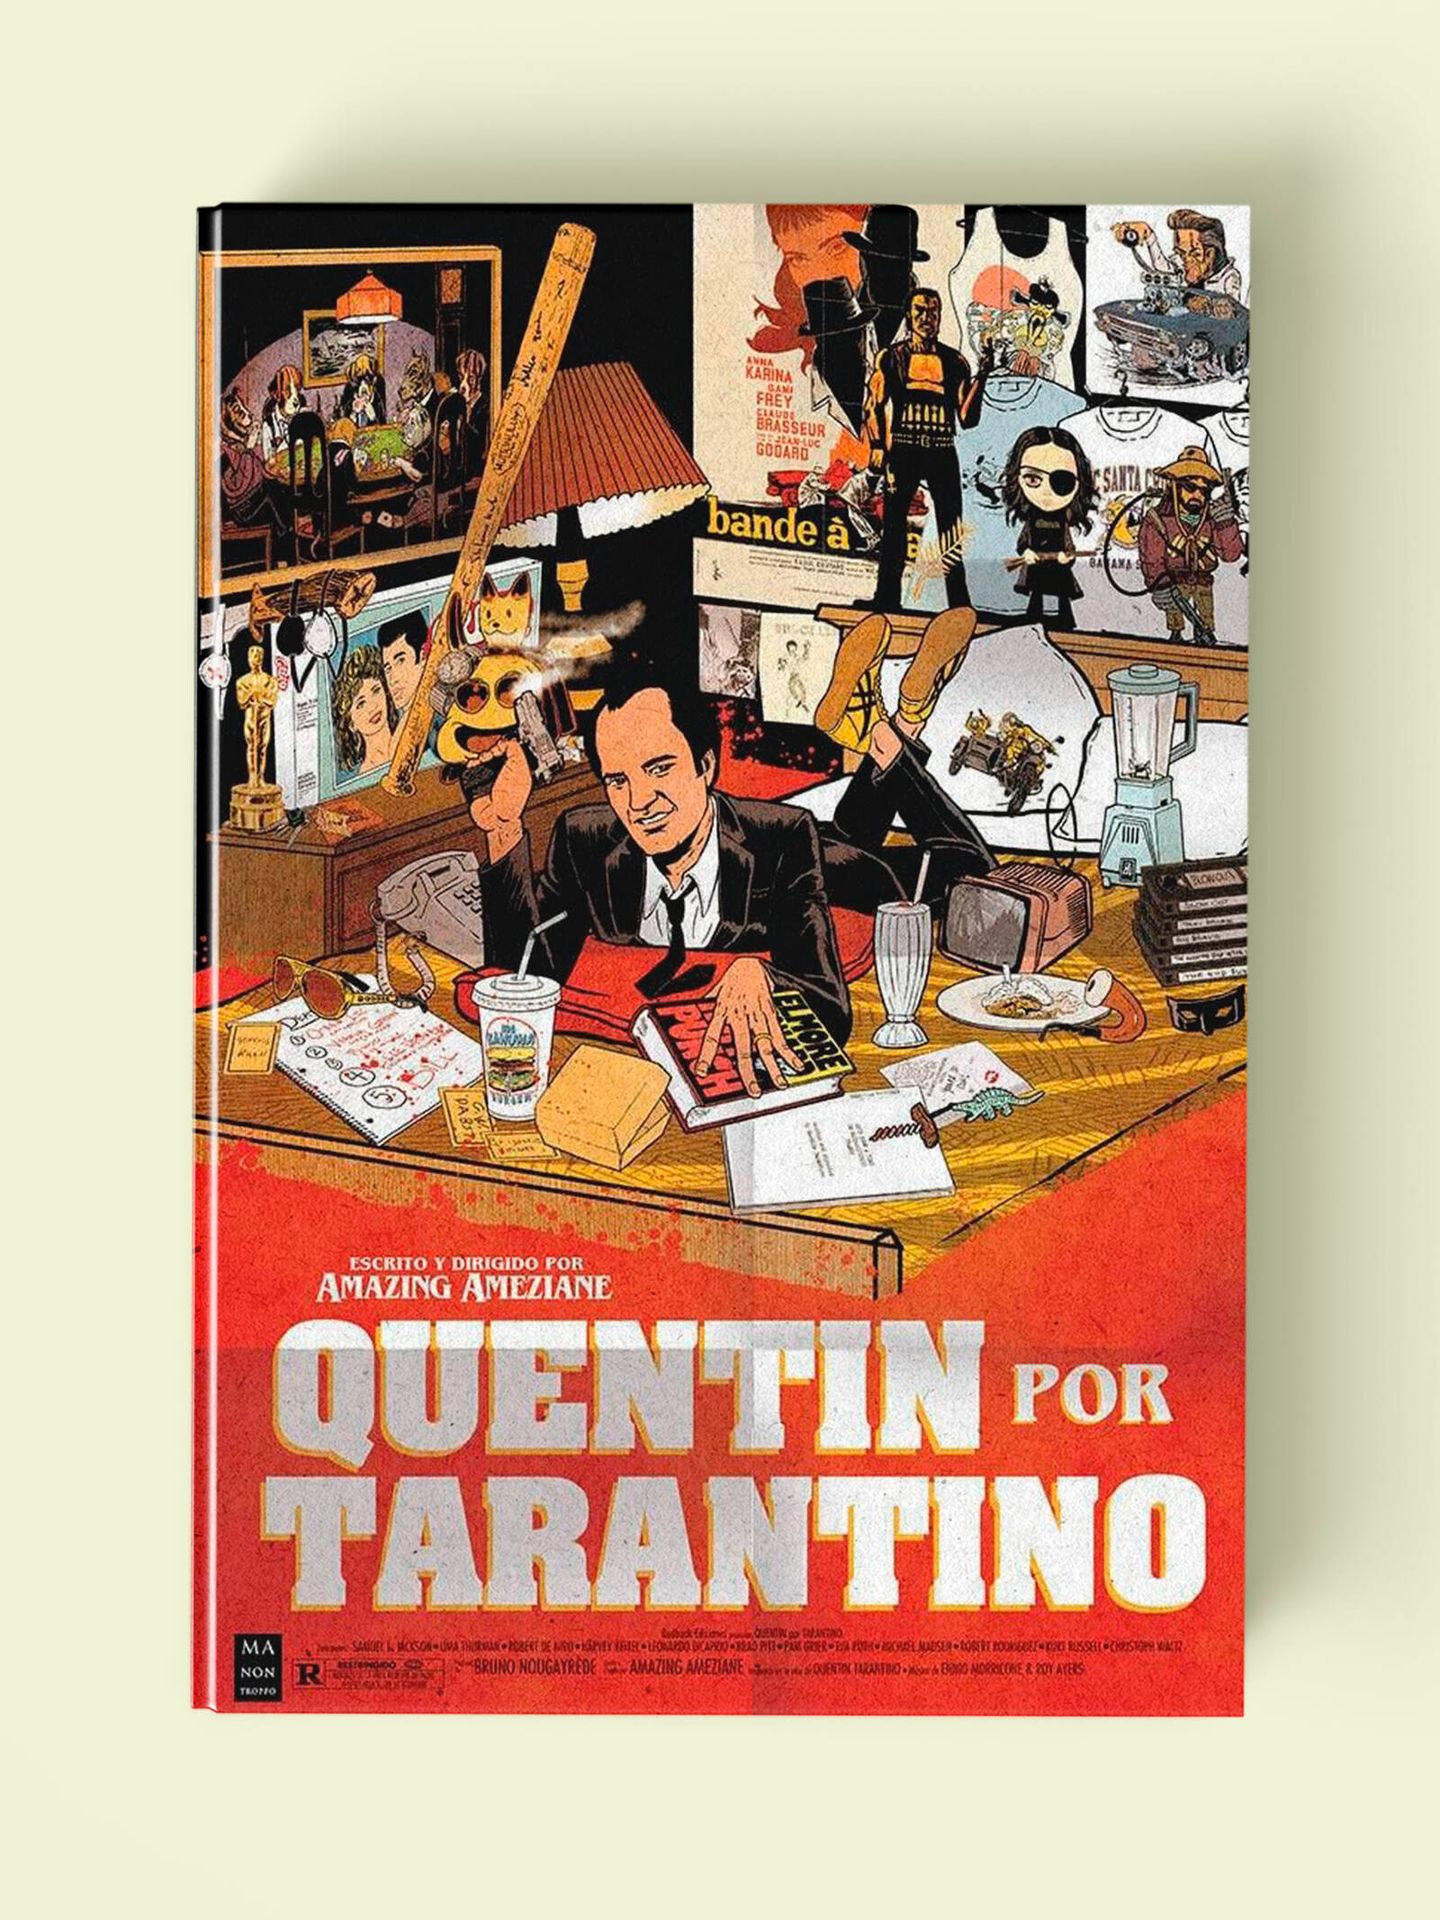 Portada de 'Quentin por Tarantino', de Amazing Ameziane.